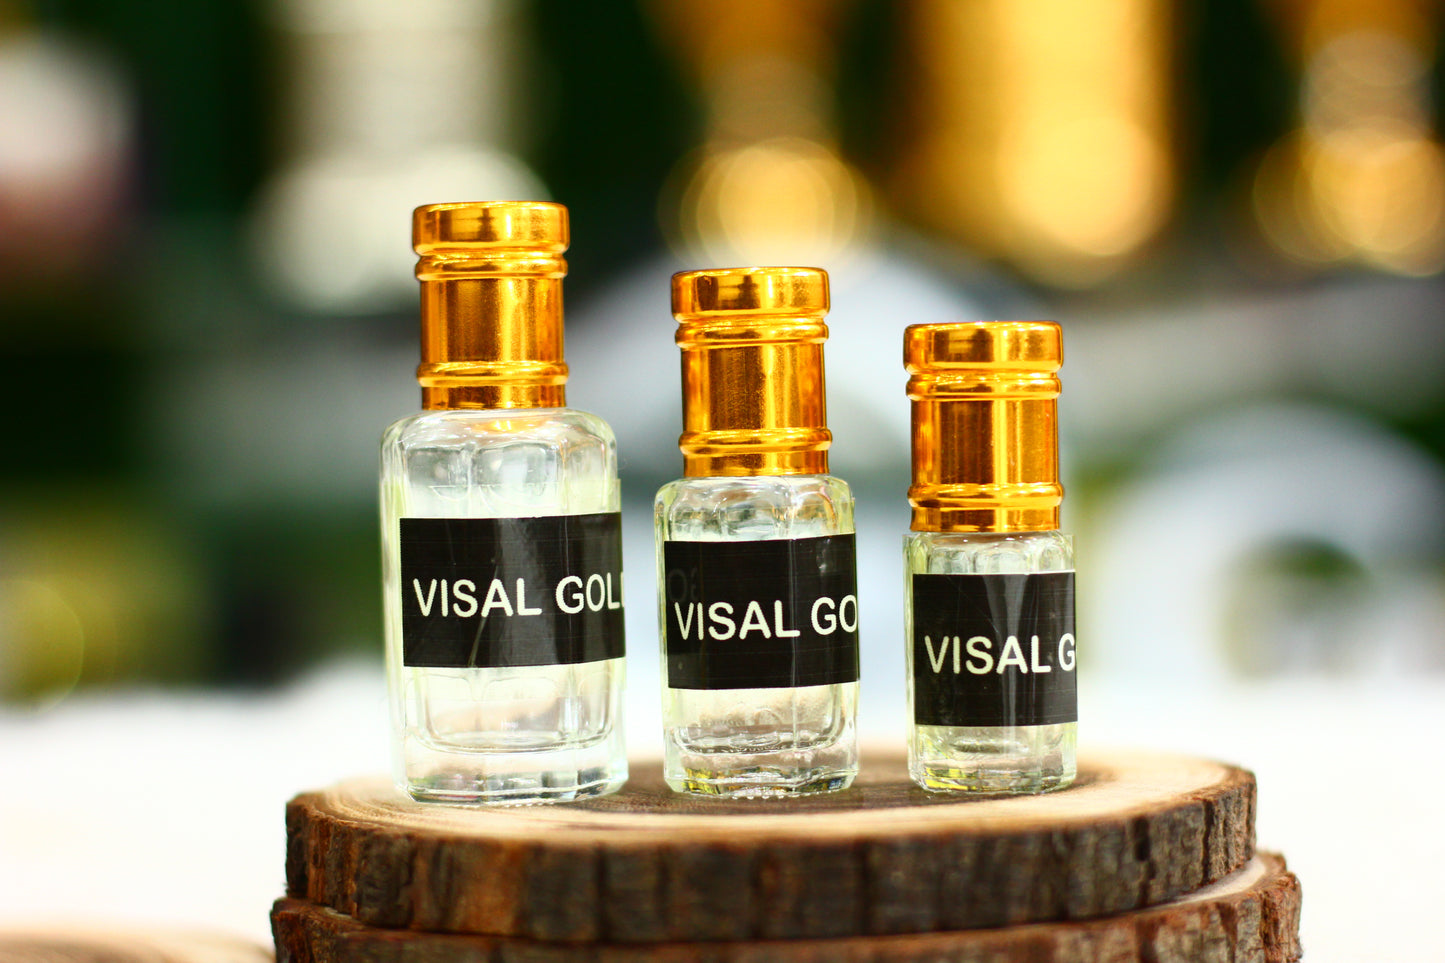 Visal Gold Attar - A Luxurious and Radiant Fragrance